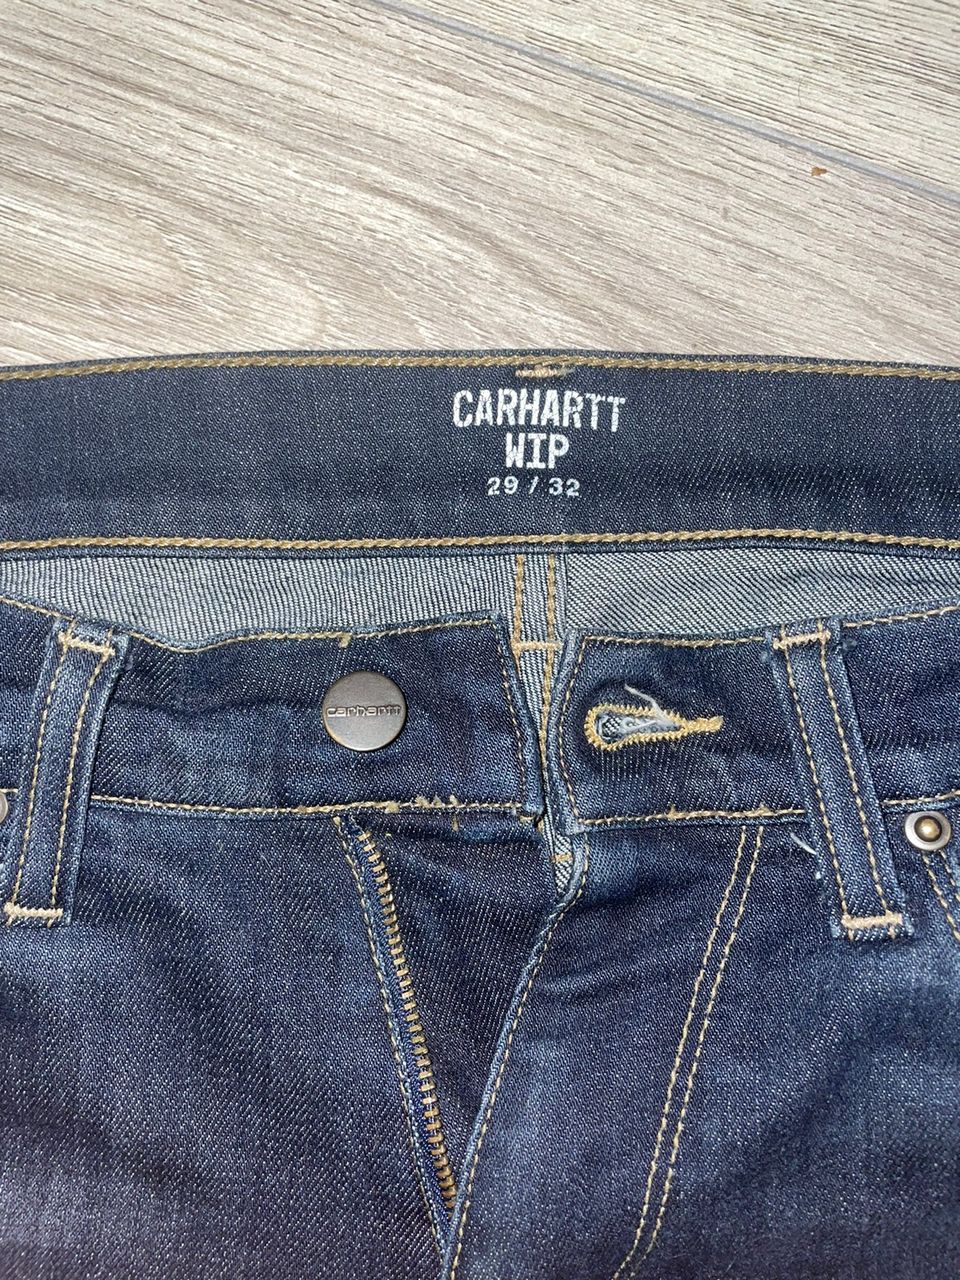 Carhartt Slim Fit Jeans